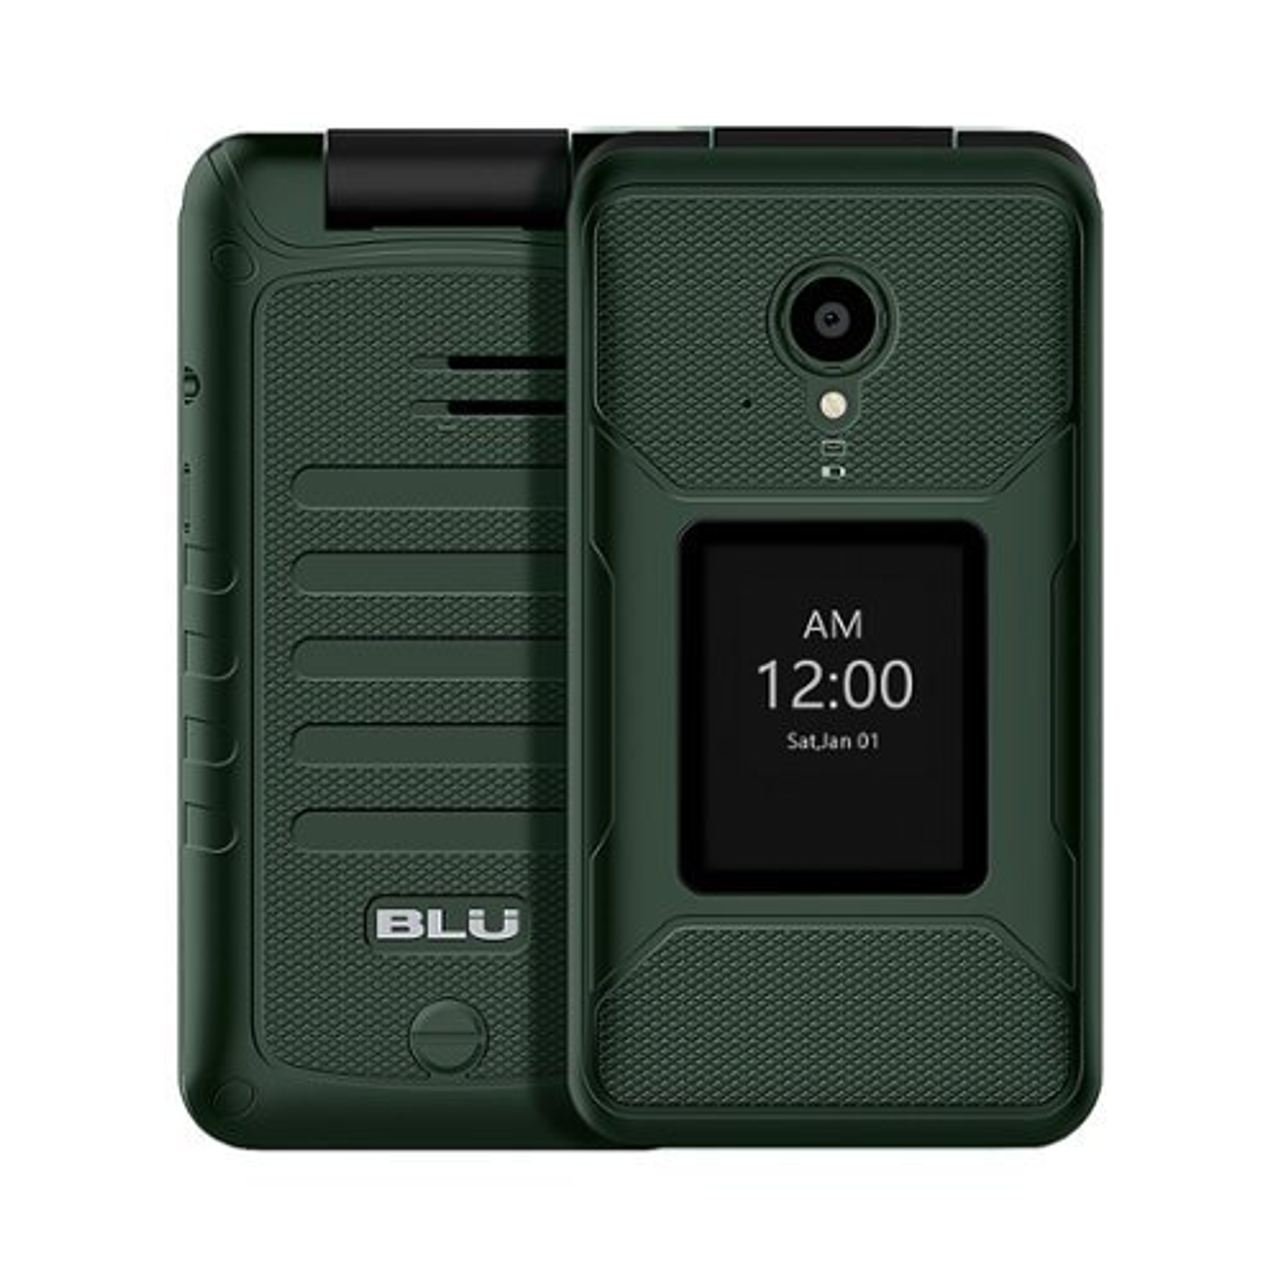 BLU - Tank Flip 4G LTE (Unlocked) - Green